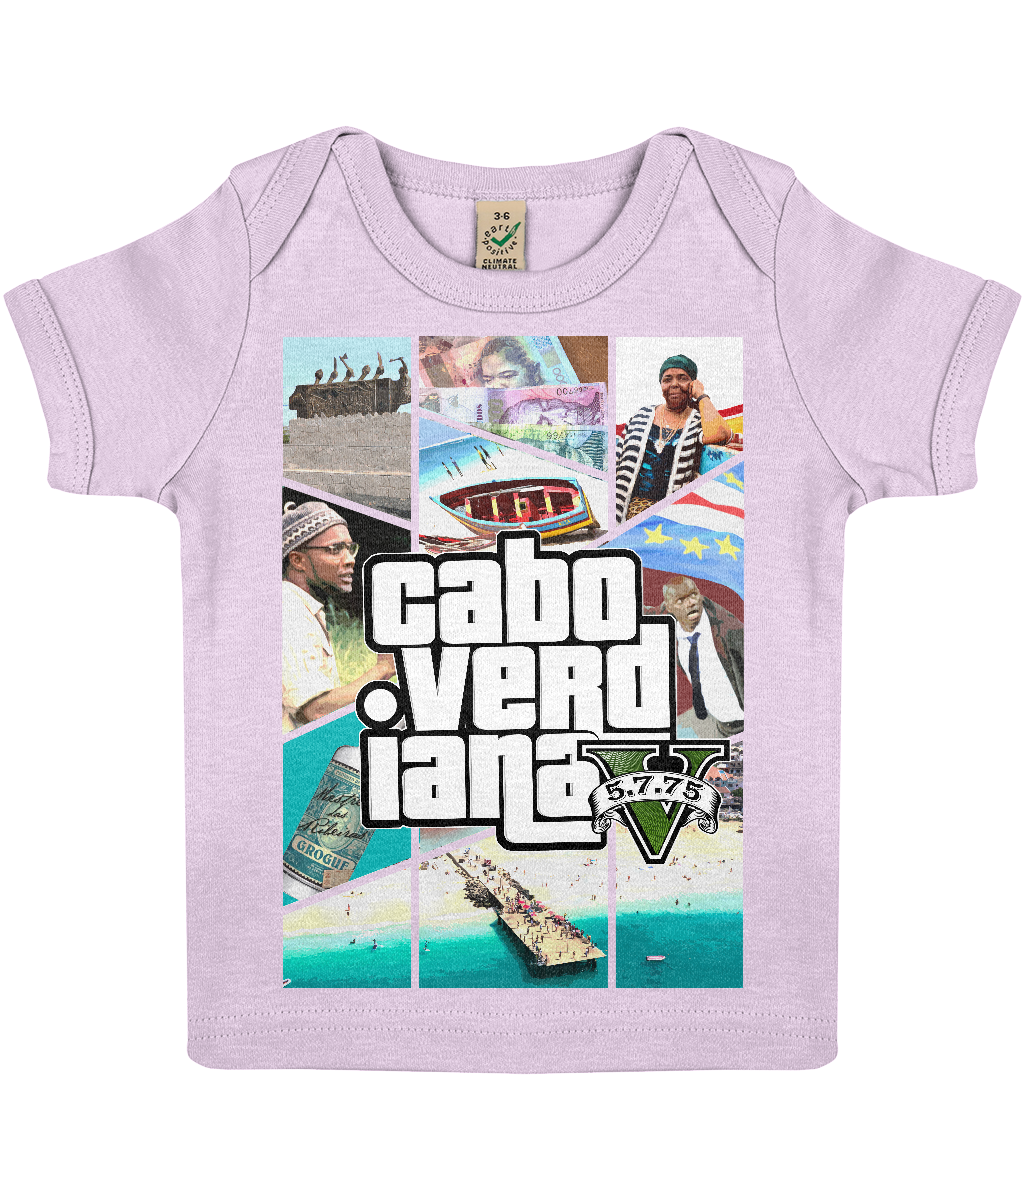 Cabo verde Baby Lap T-shirt  "Caboverdiana" - CVC Streetwear